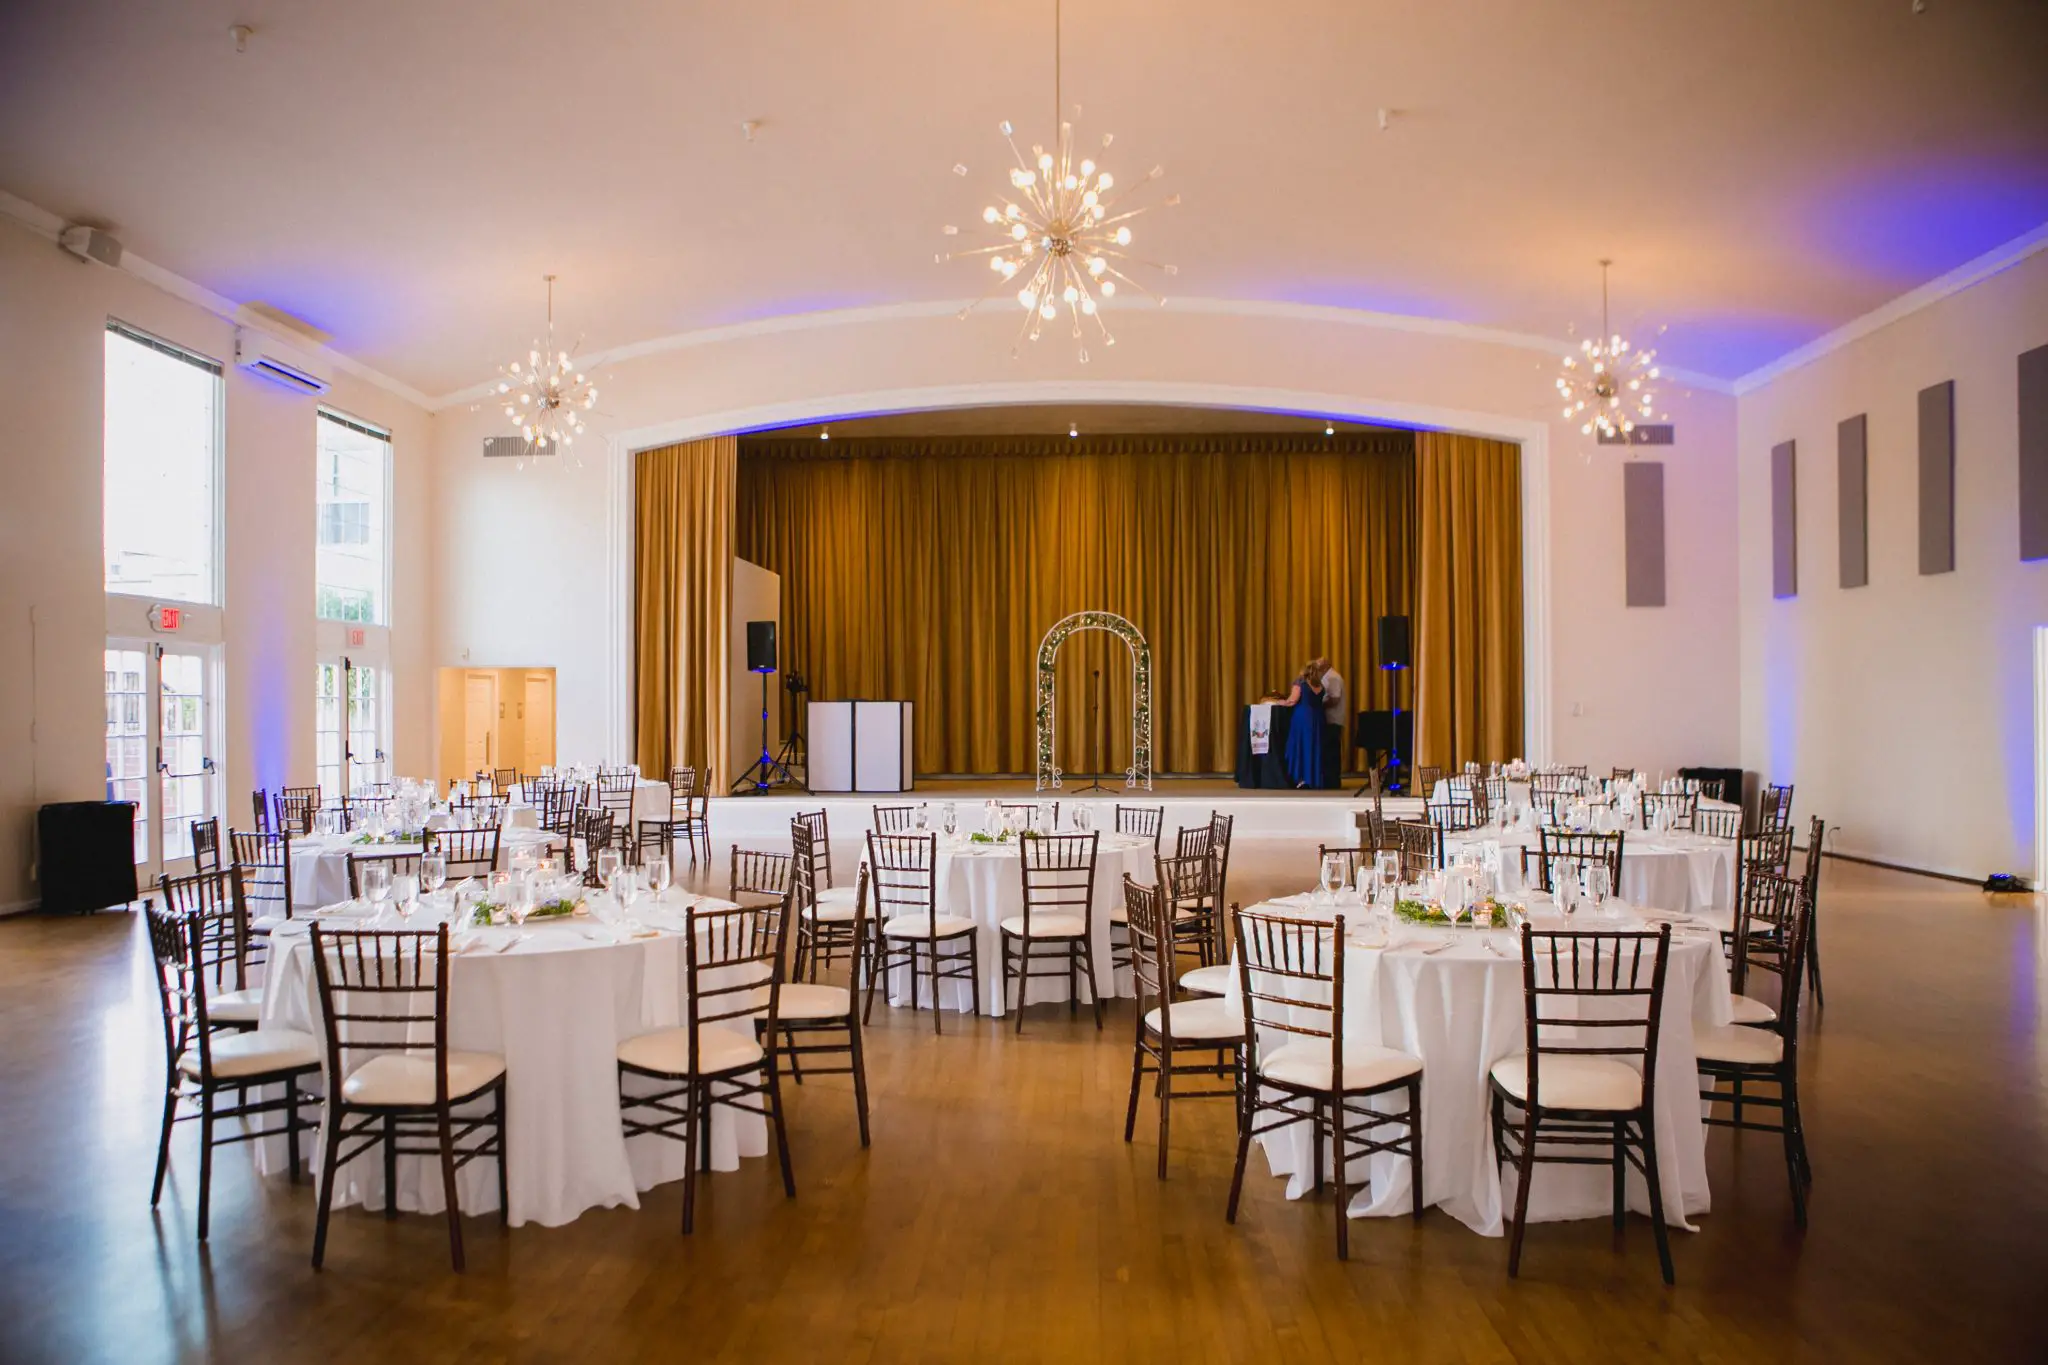 Parq West wedding reception venue in California